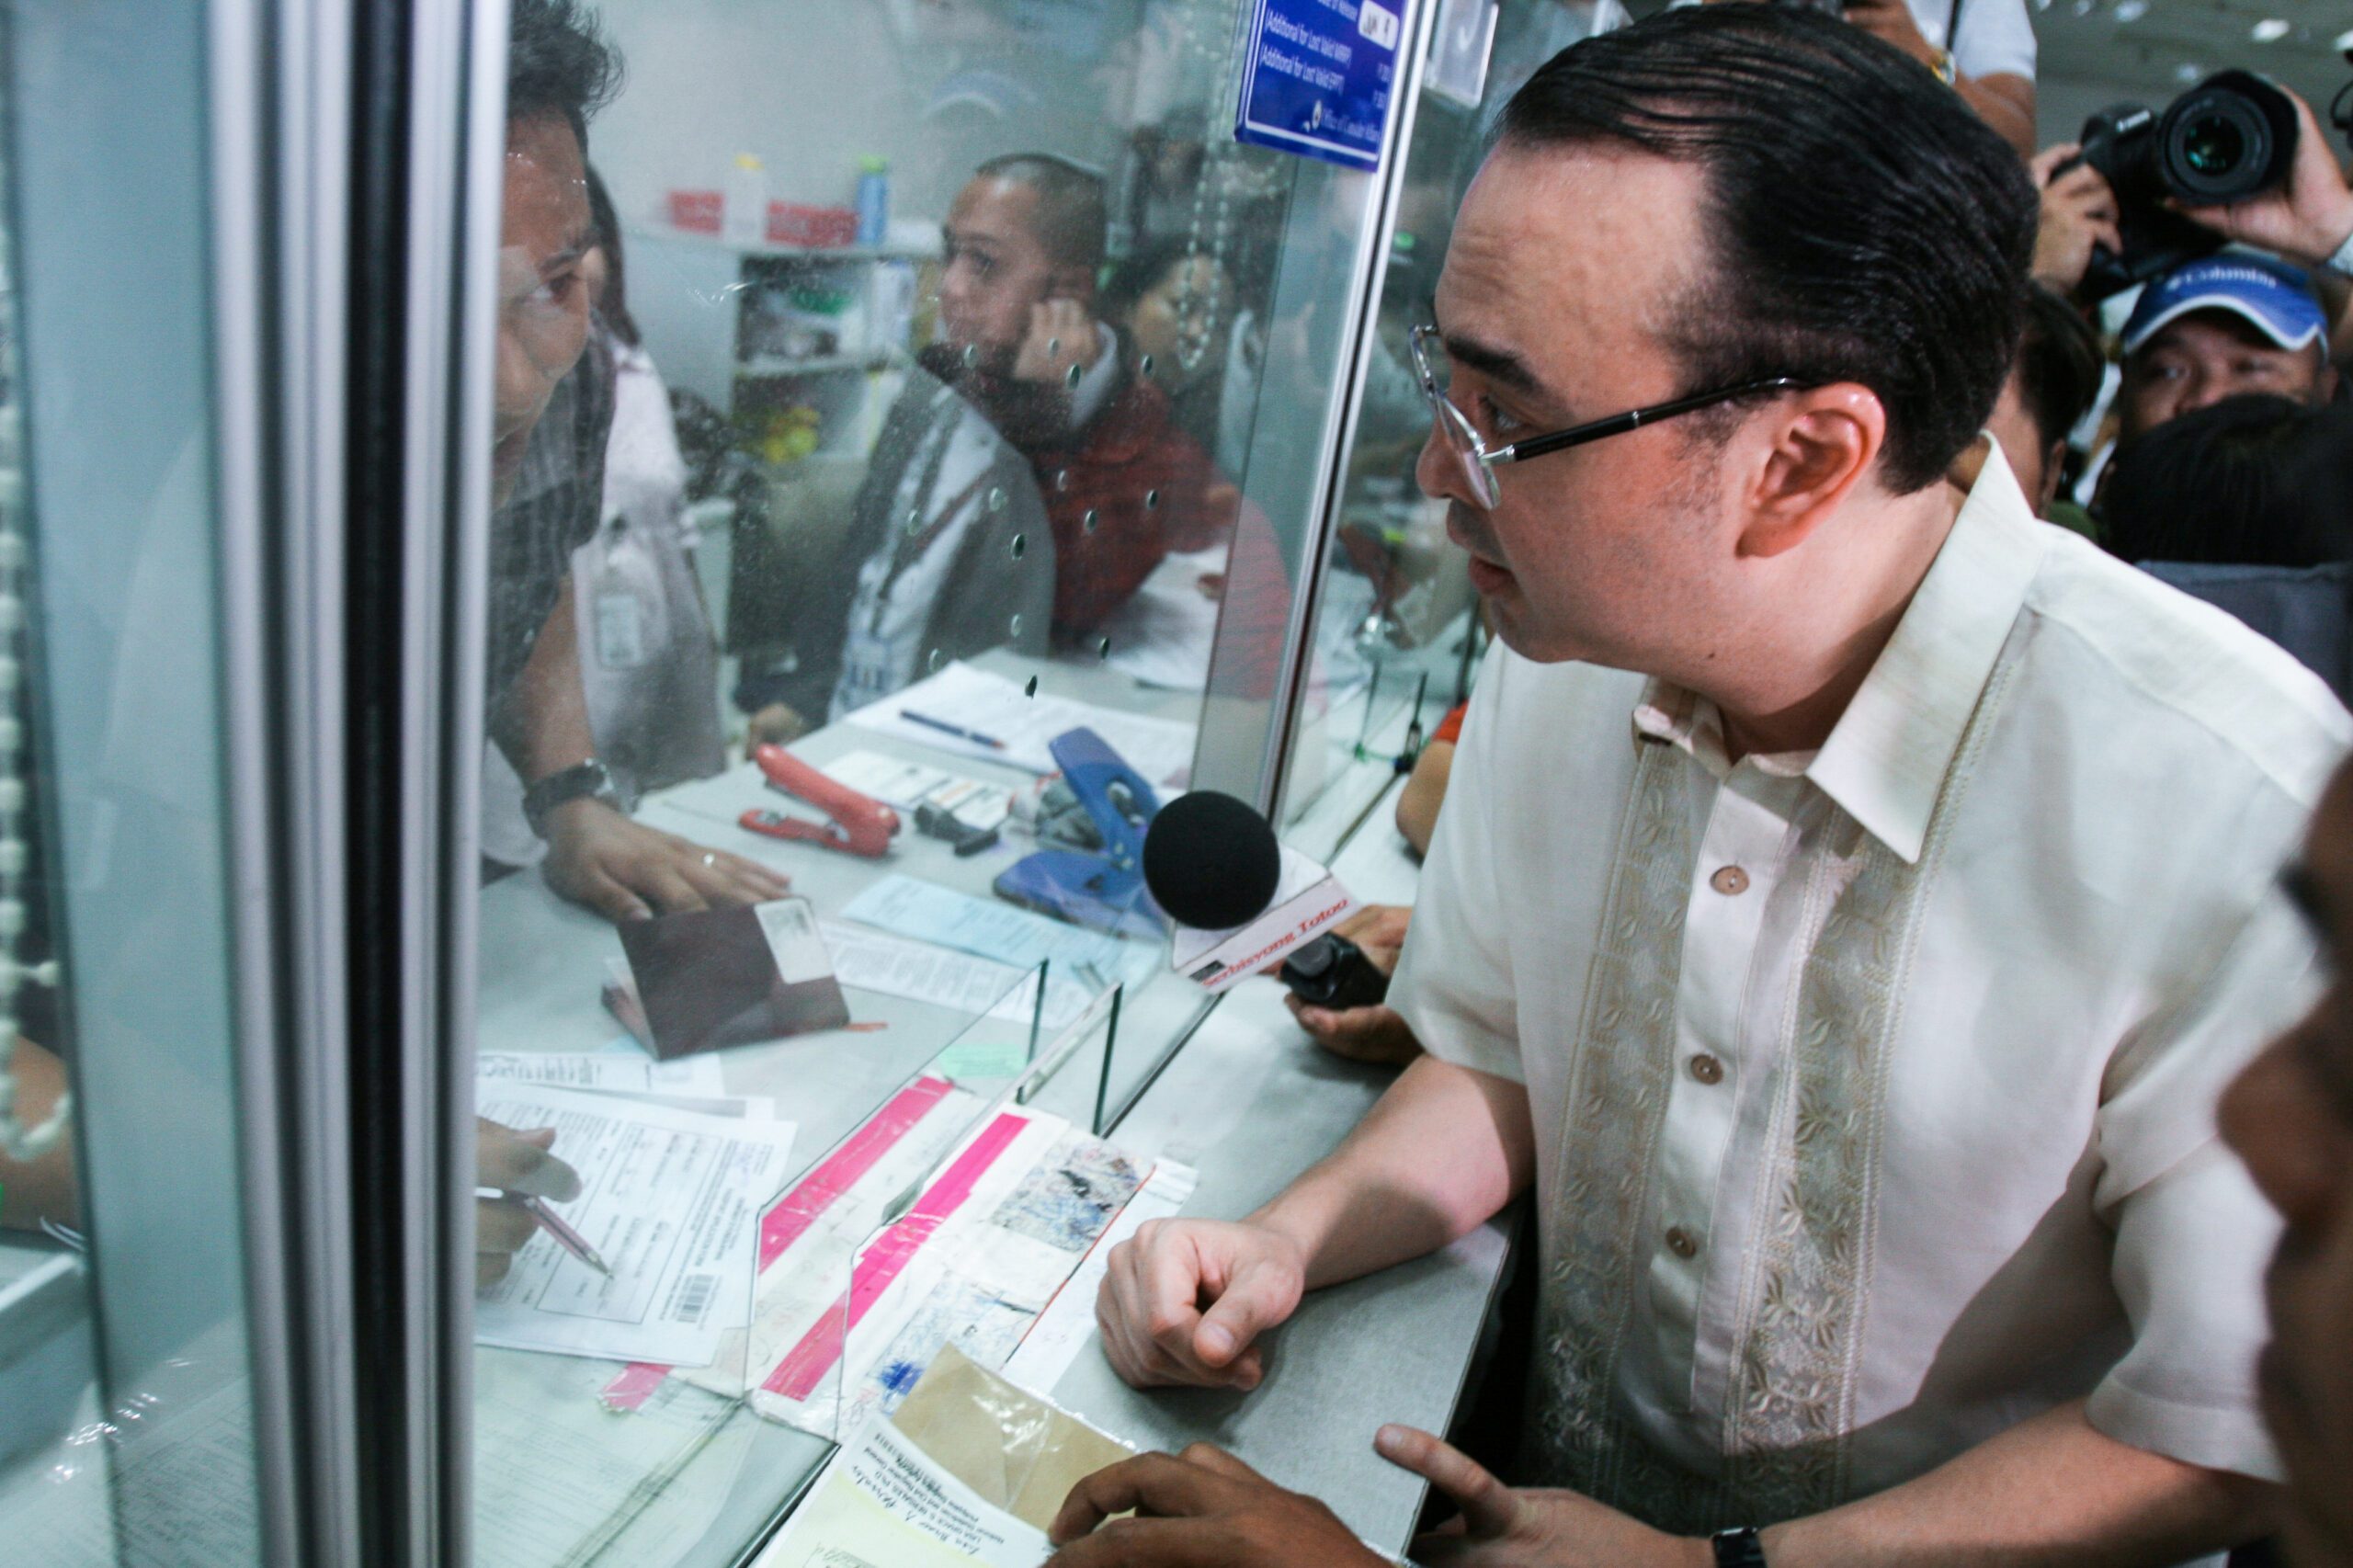 DFA to open new passport offices in Ilocos Norte, Isabela